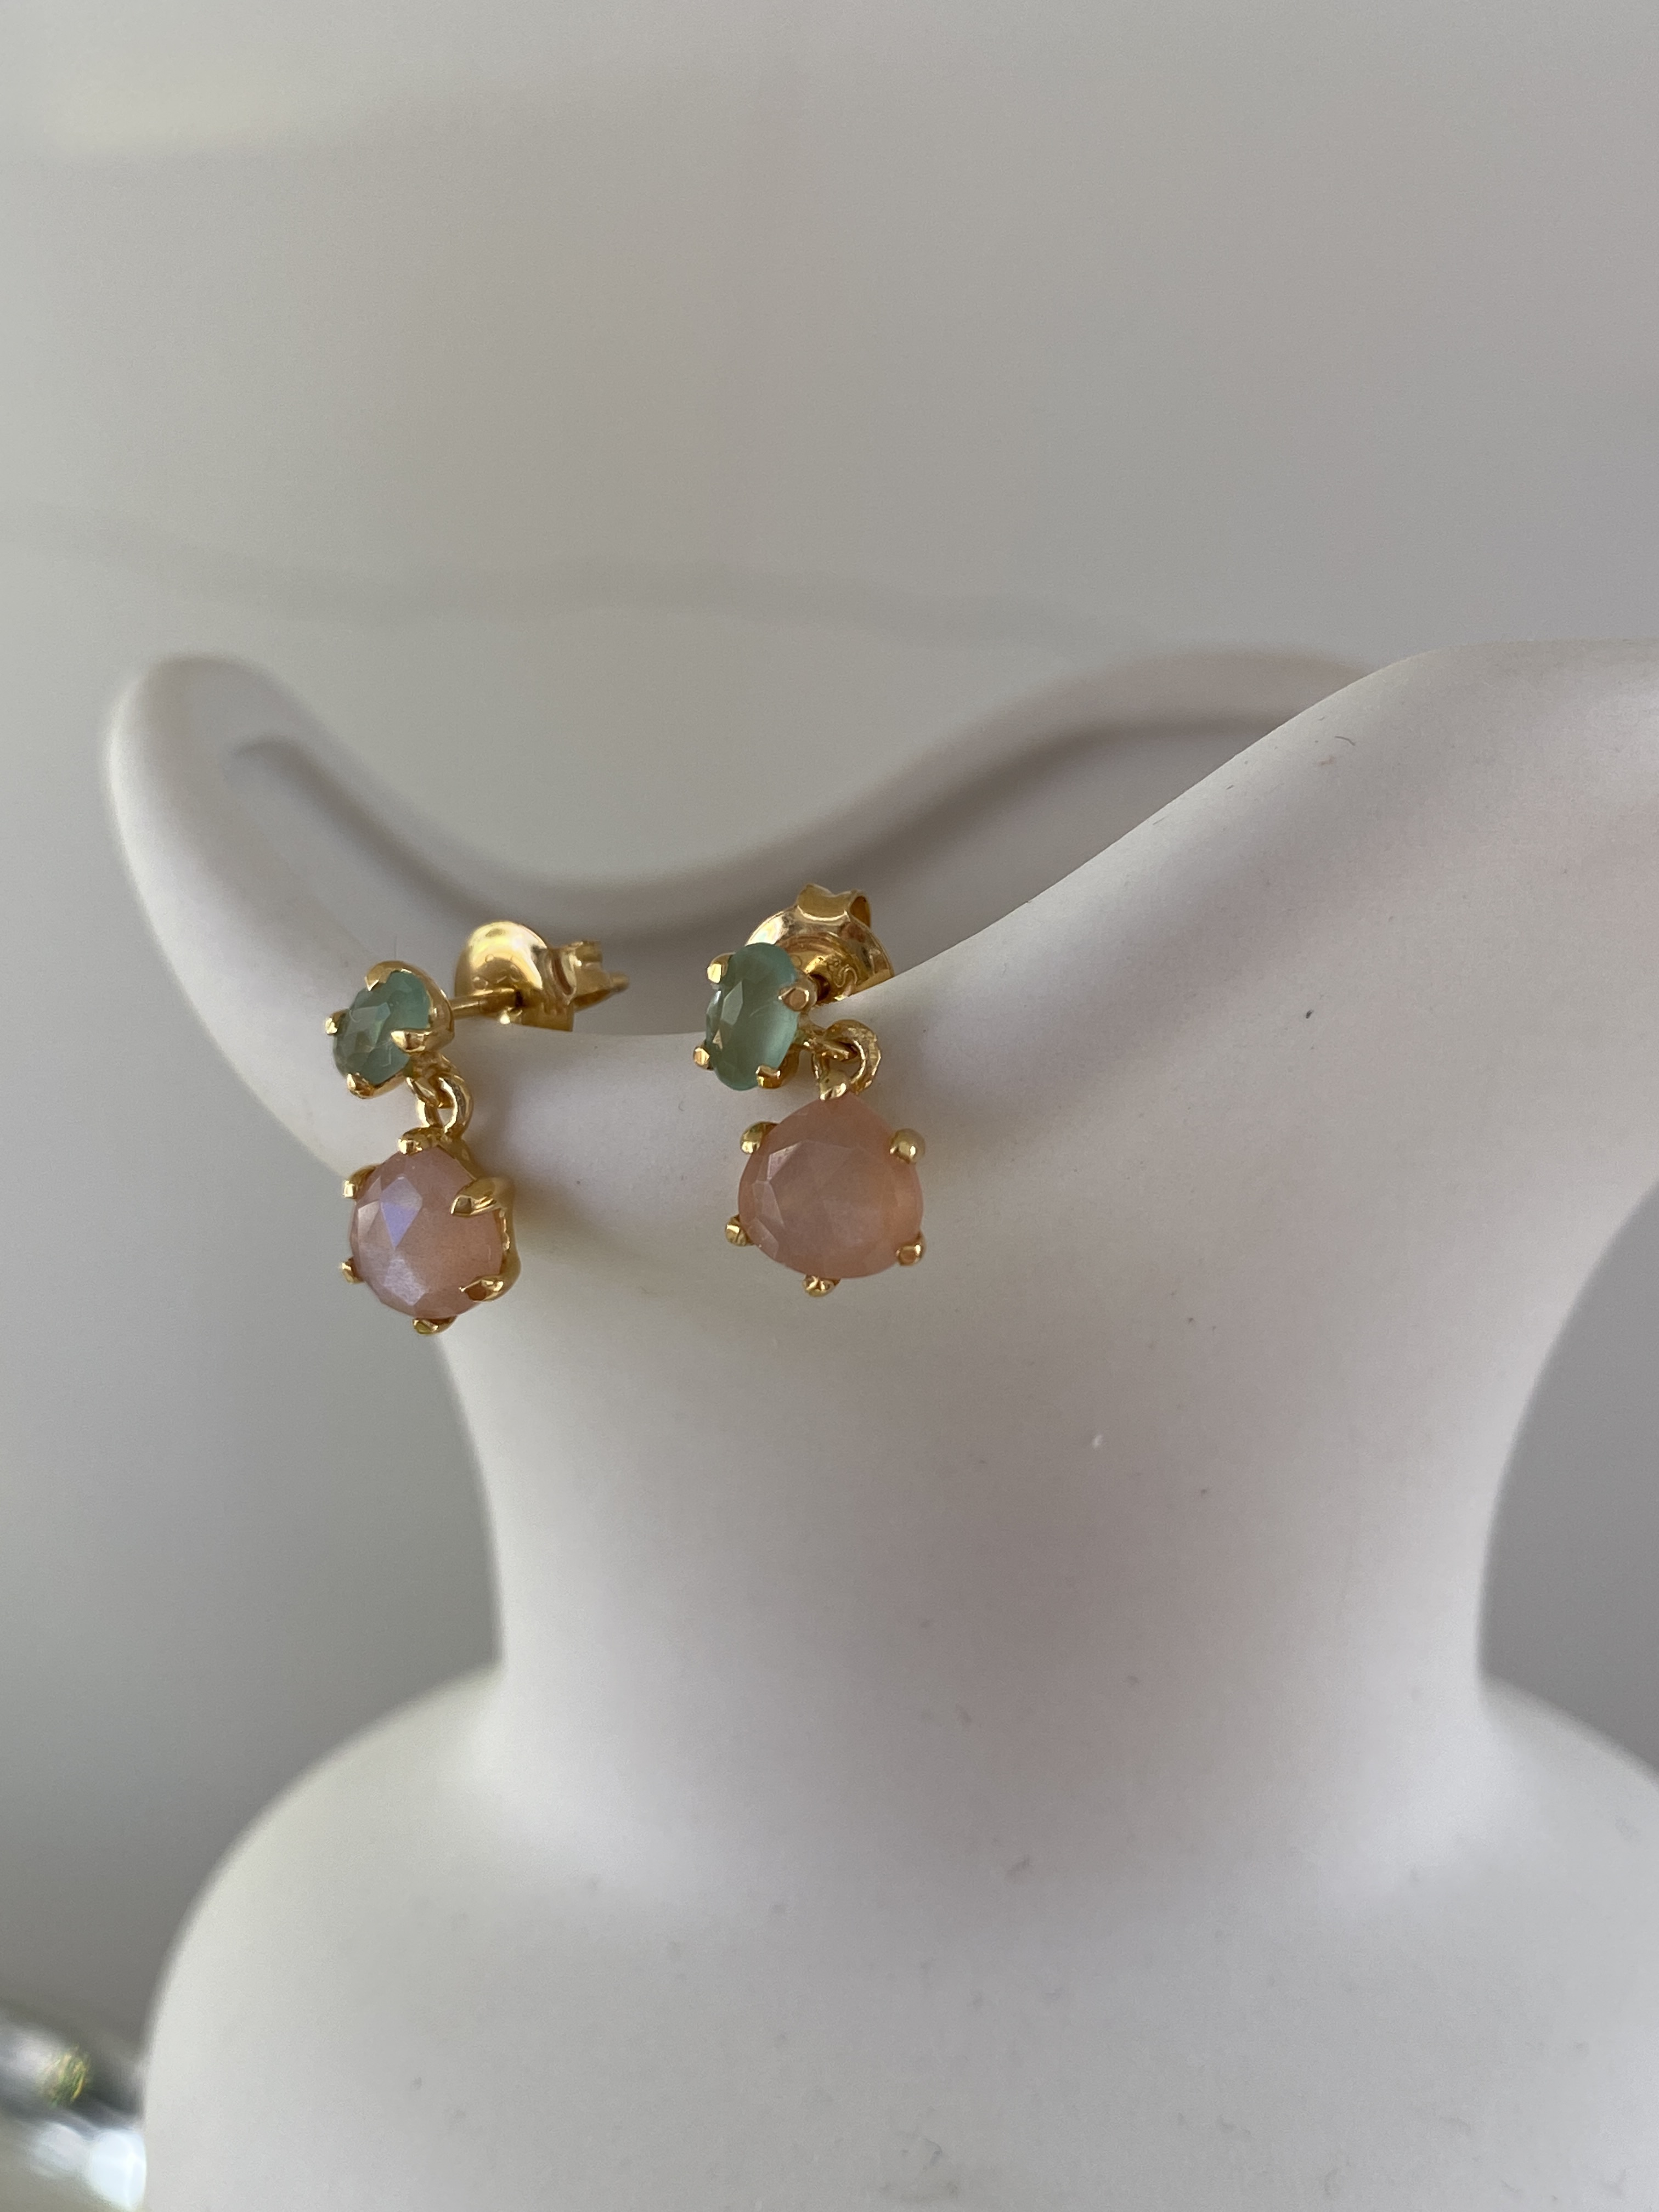 s925, gold, peach moonstone & aventurine stone earring